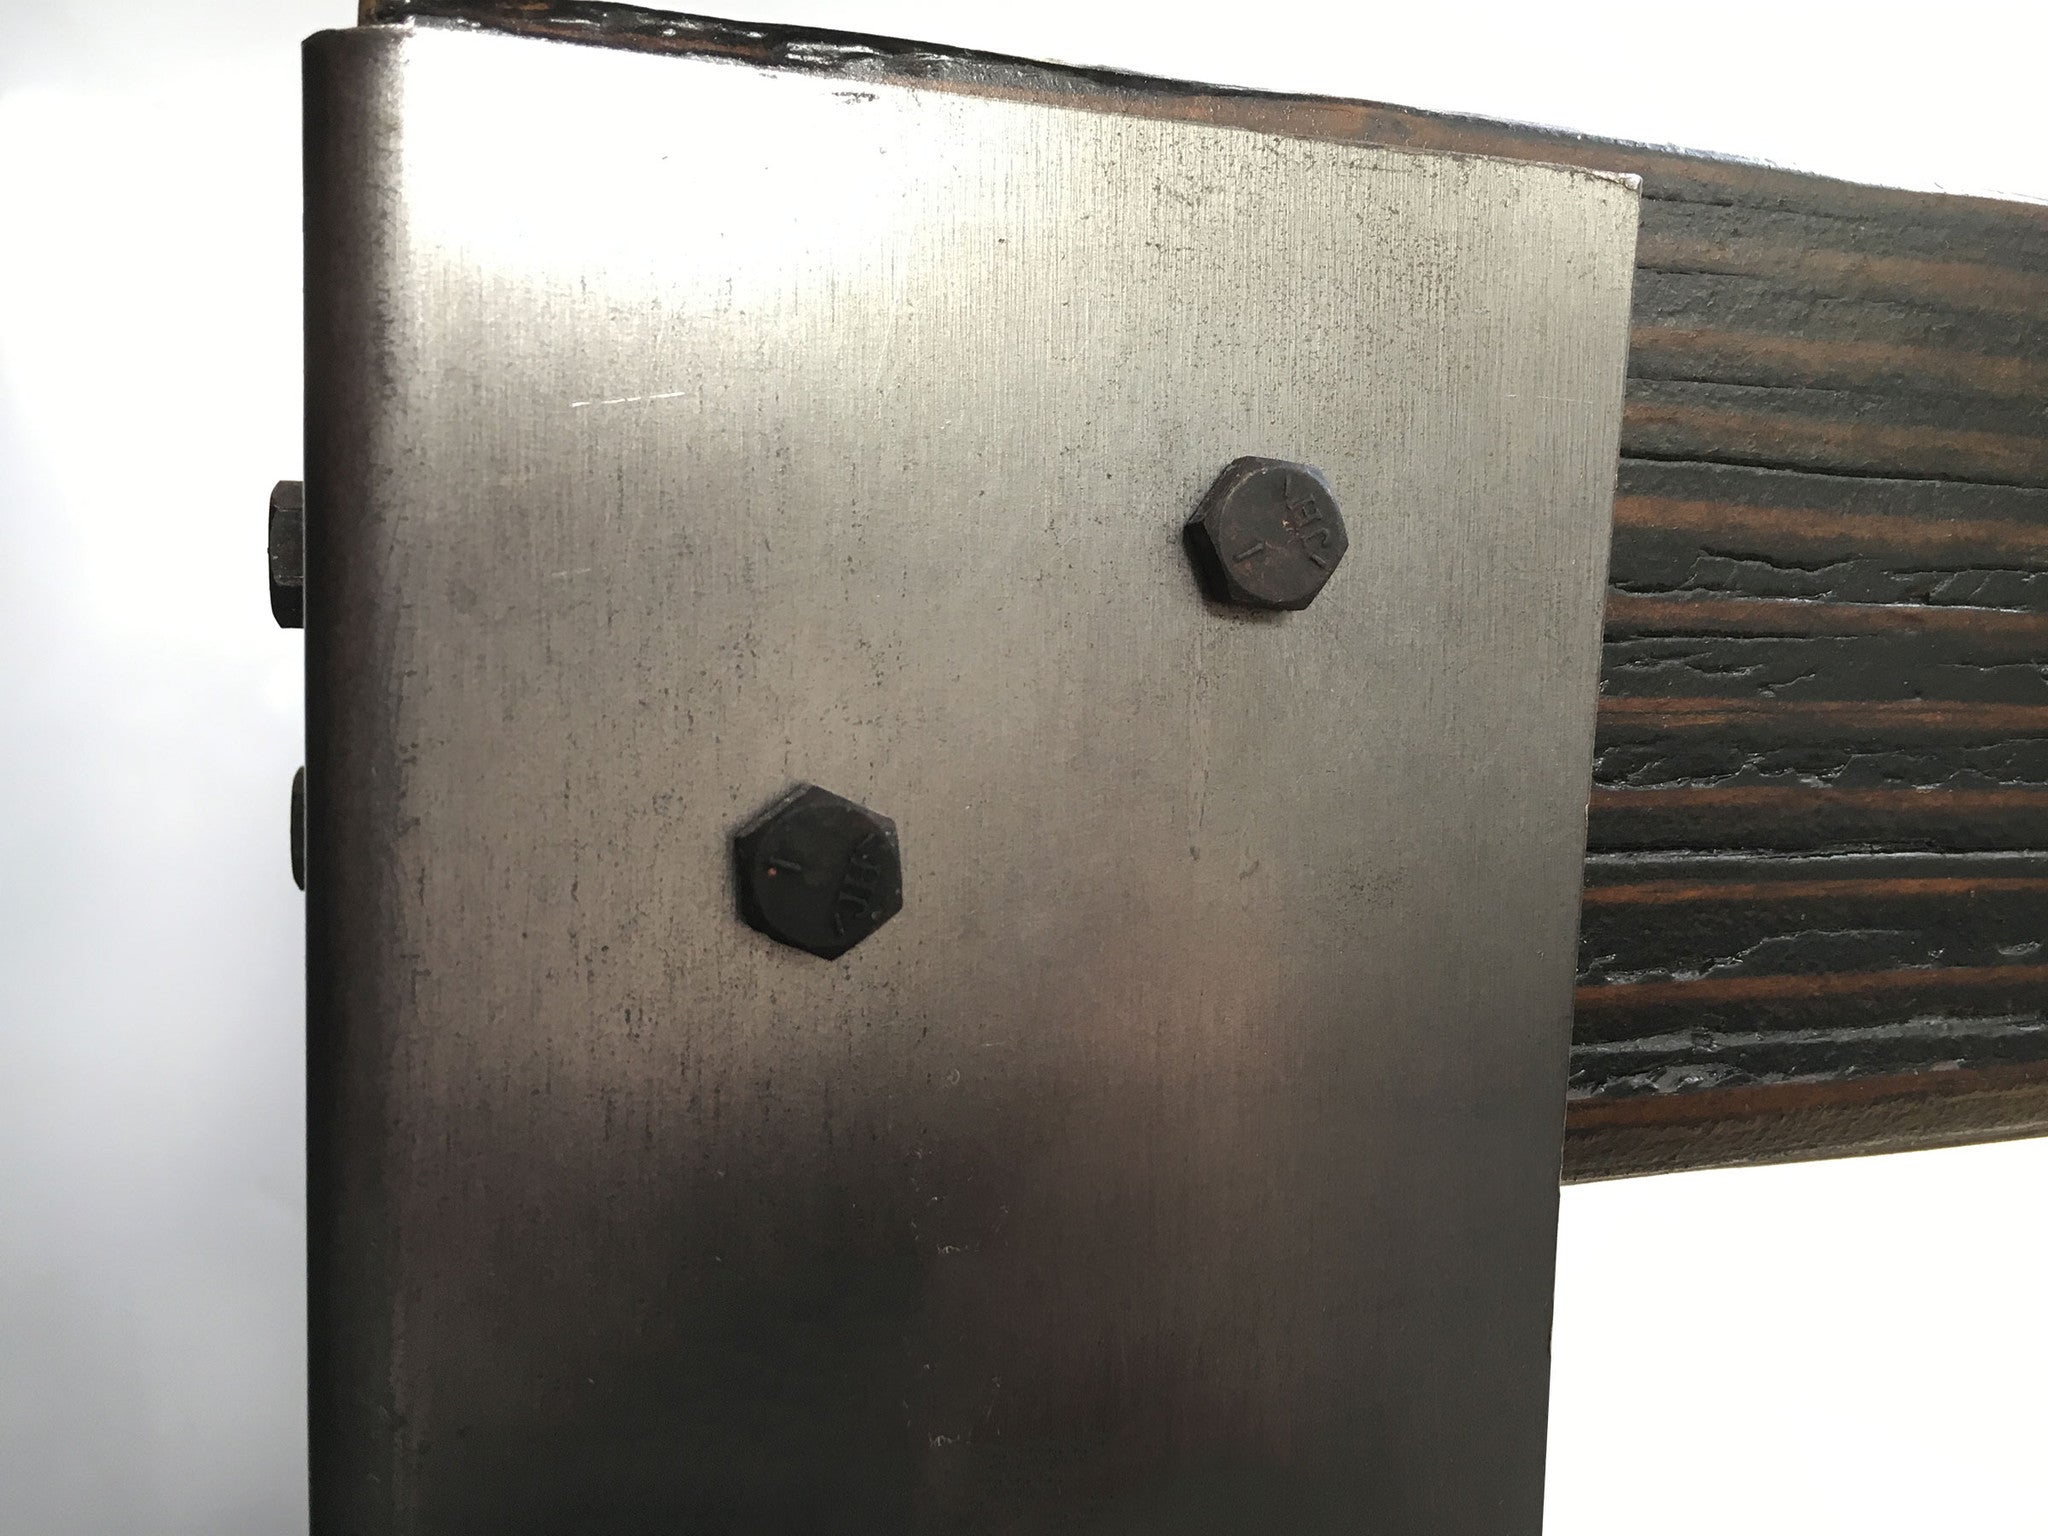 Reclaimed Wood and Hand Welded Steel Industrial Desk Hammers and Heels